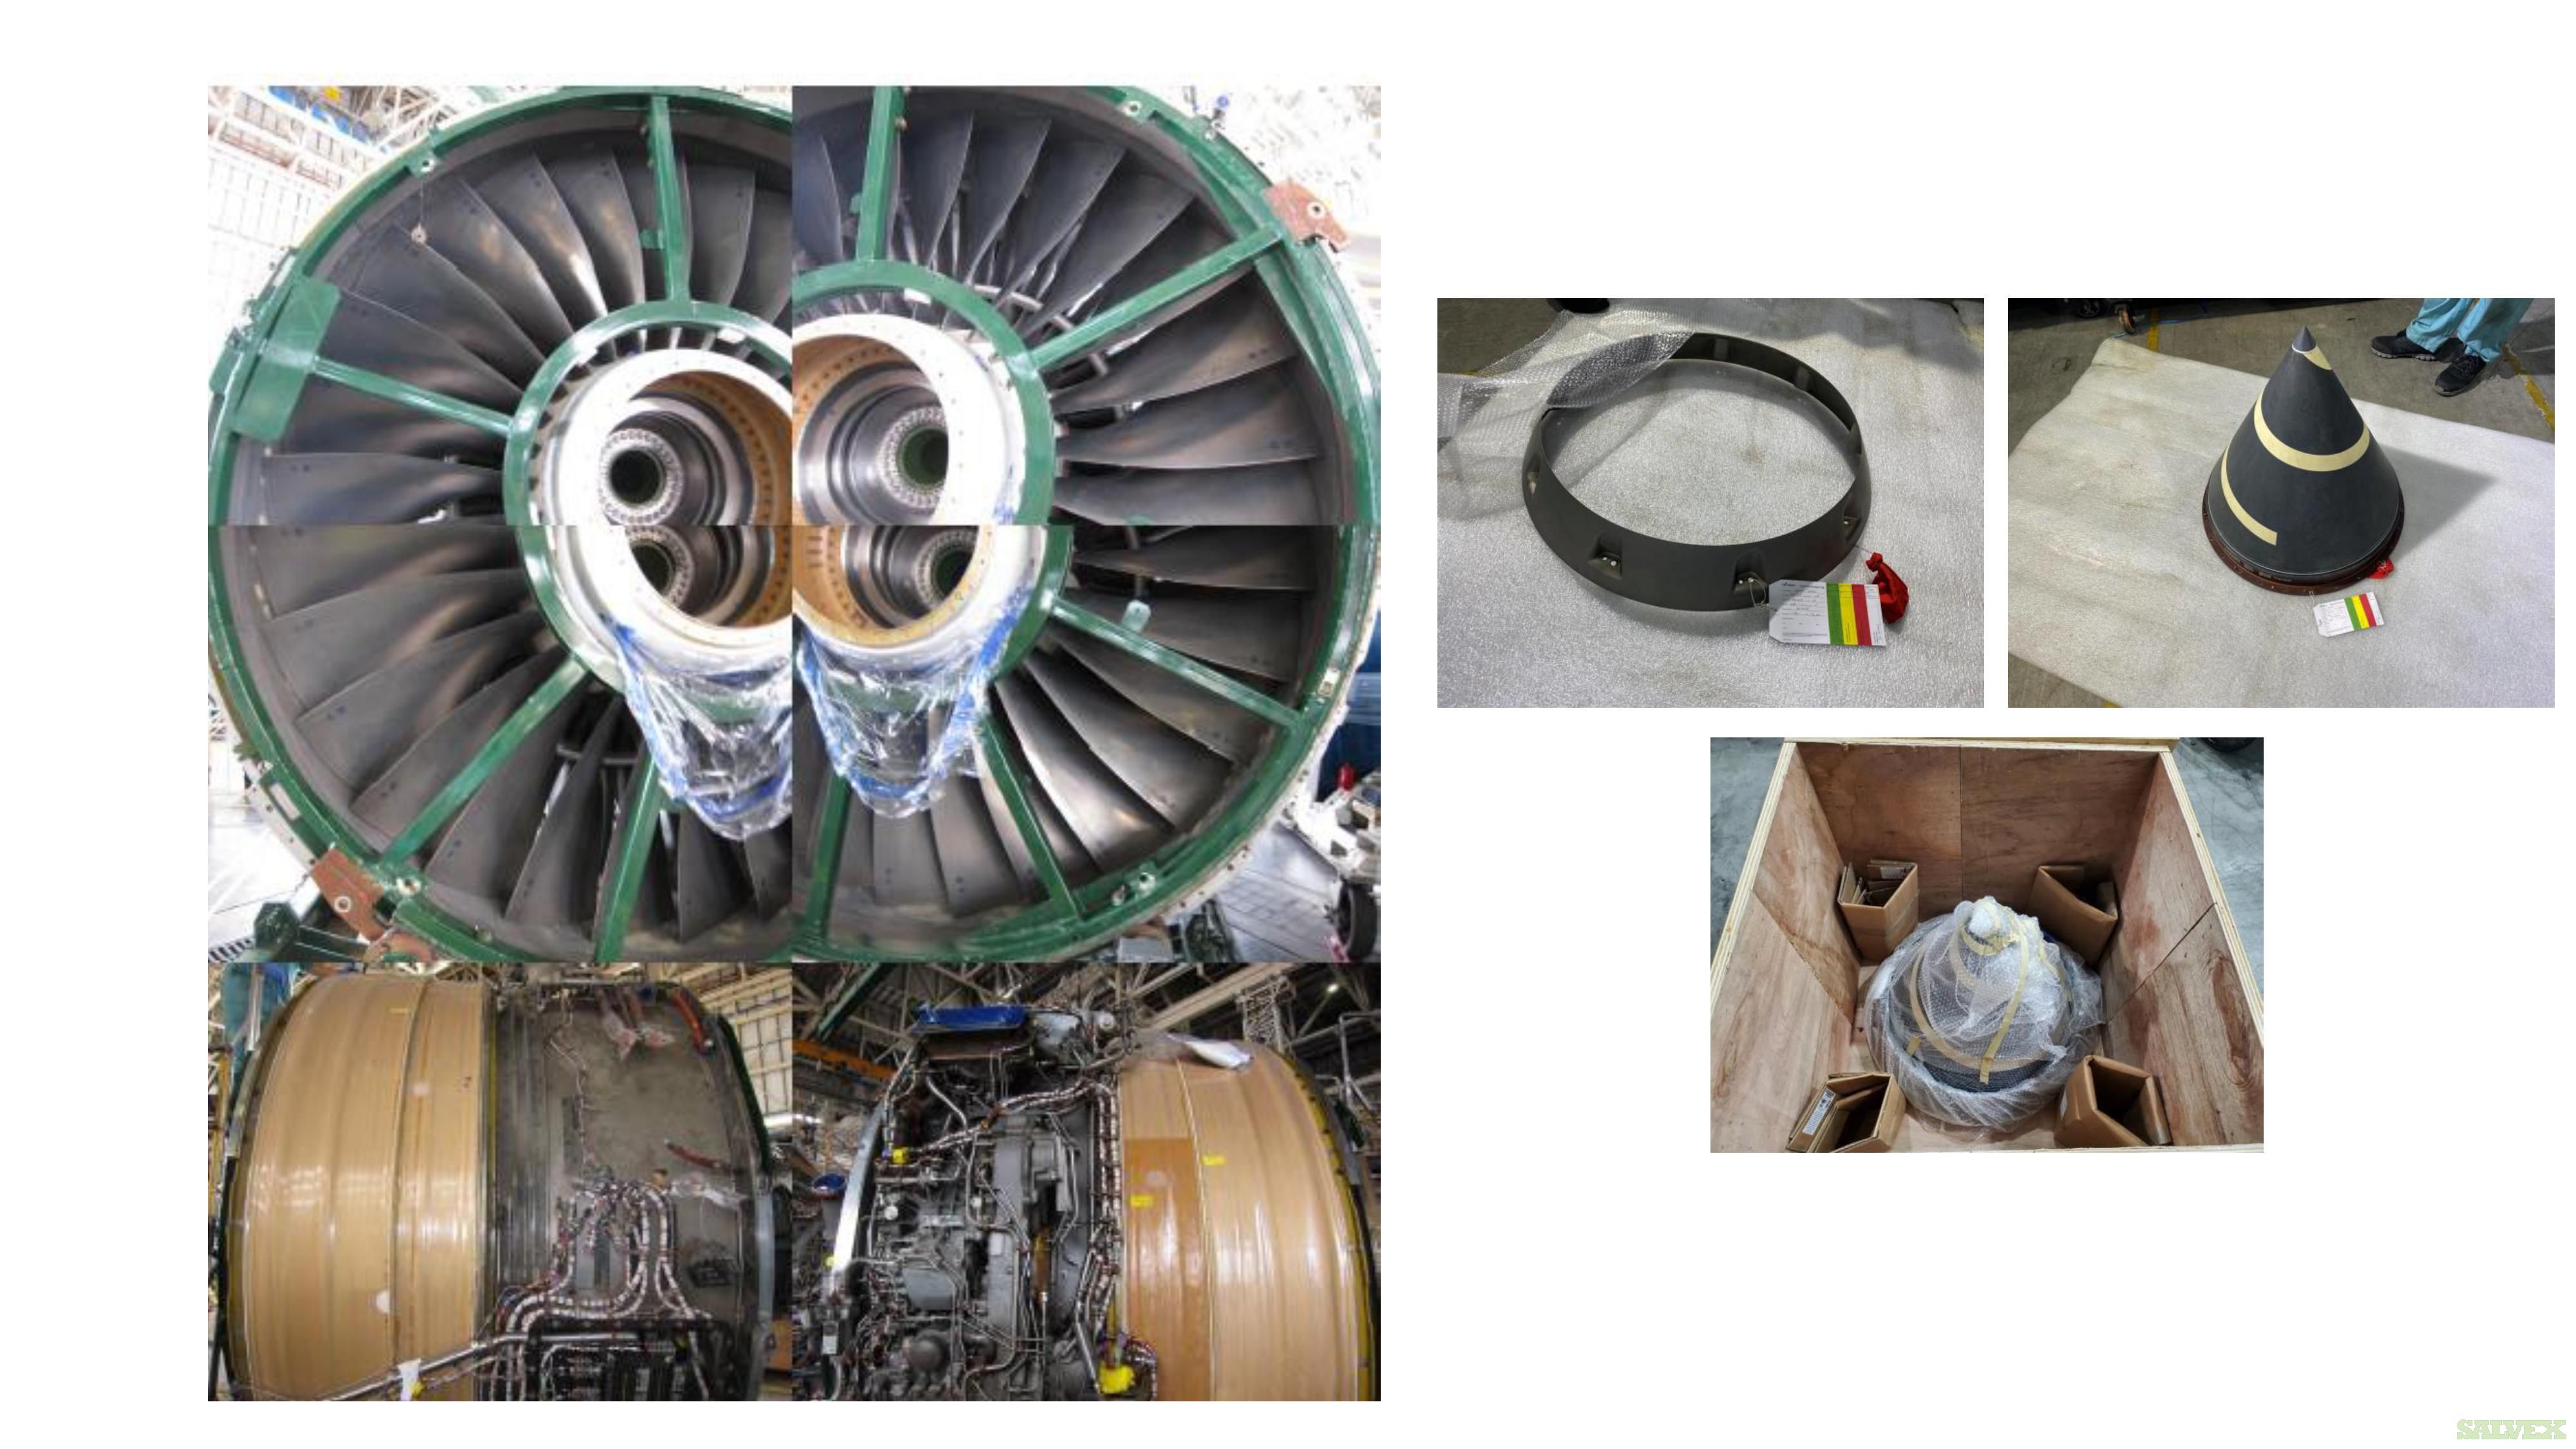 Rolls Royce ESN 51430 Trent 800 Engine (1 Unit) - in SV Condition